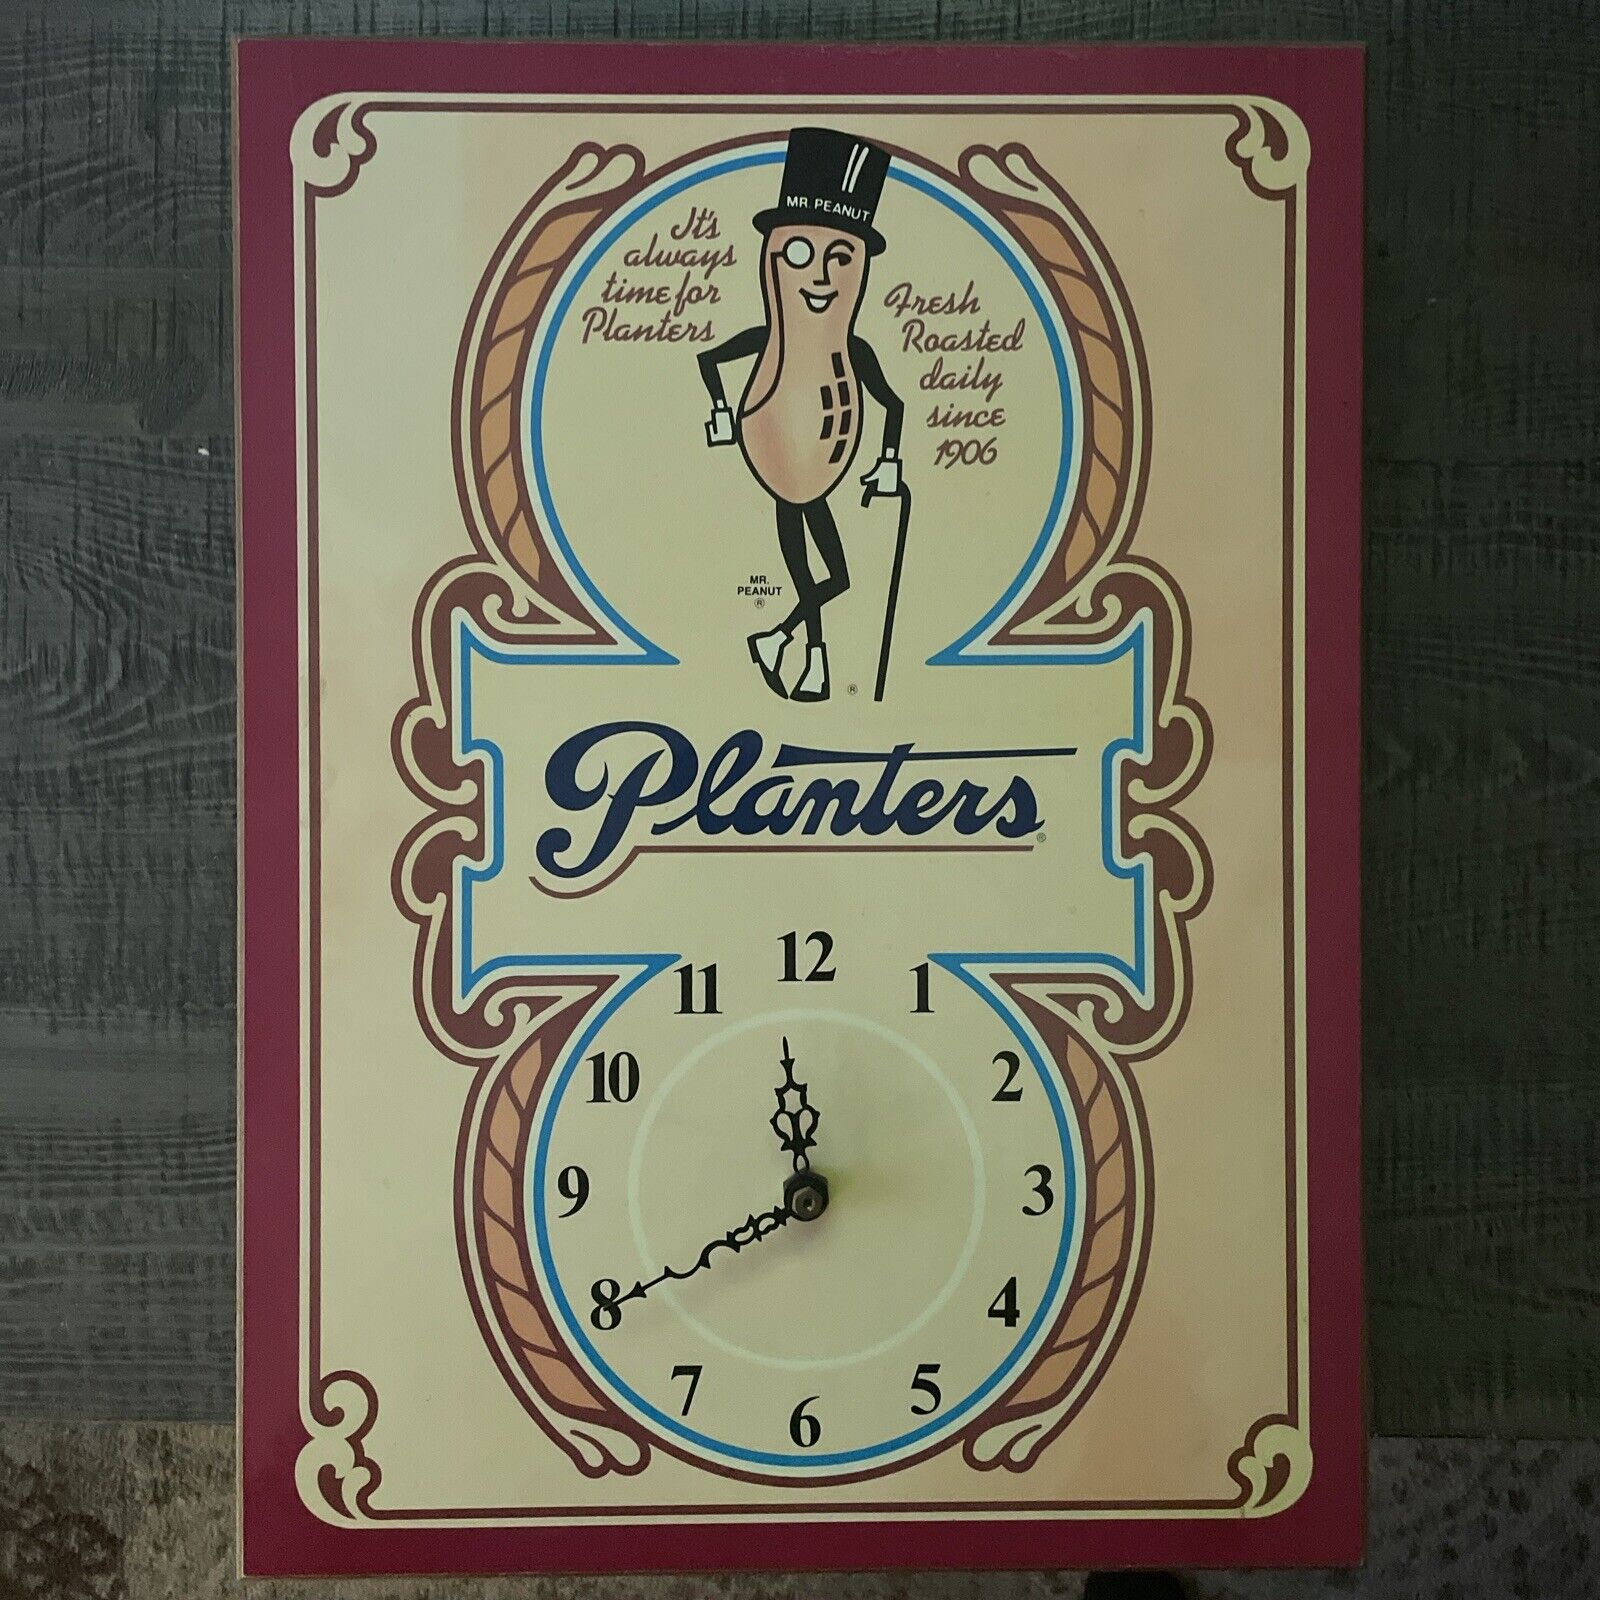 Mr. Peanut “It’s Always Time For Planters” Vintage Clock